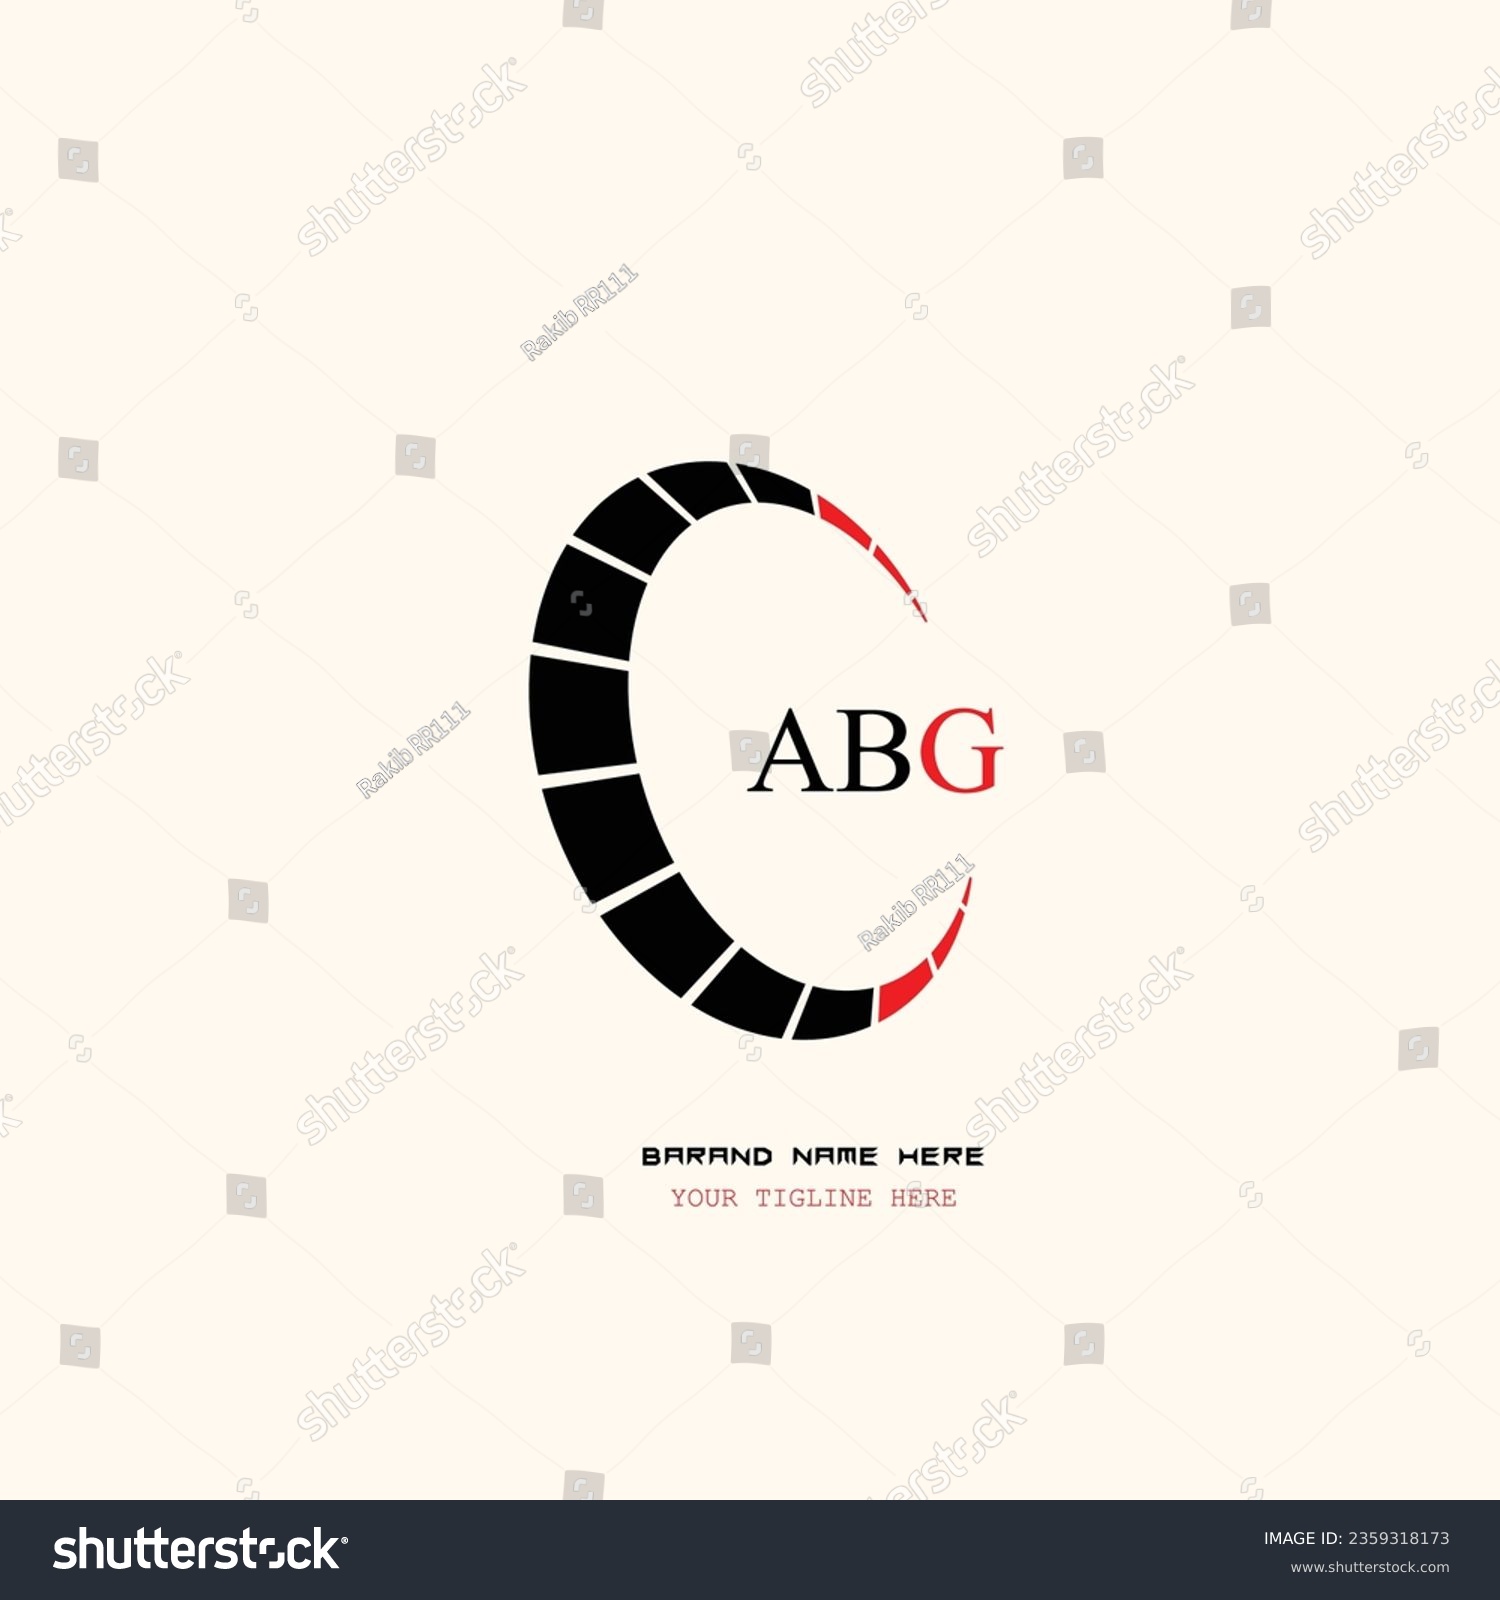 SVG of abg logo. abg latter logo with double line. abg latter. abg logo for technology, business and real estate brand   latter logo svg